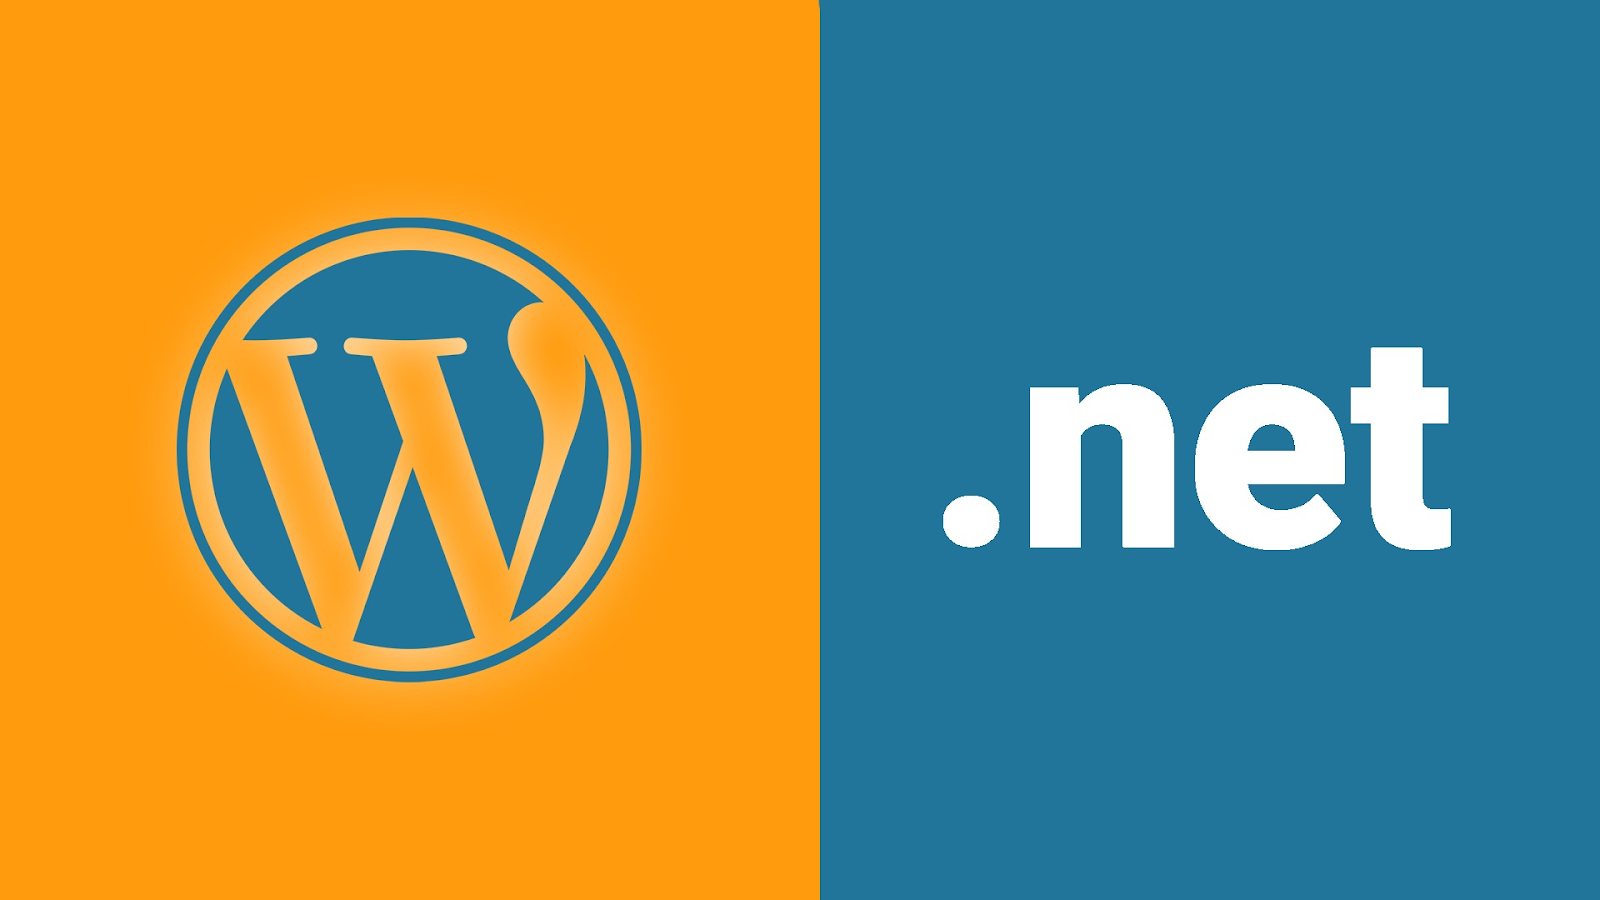 ASP net vs WordPress emblem on orange and blue backgrounds